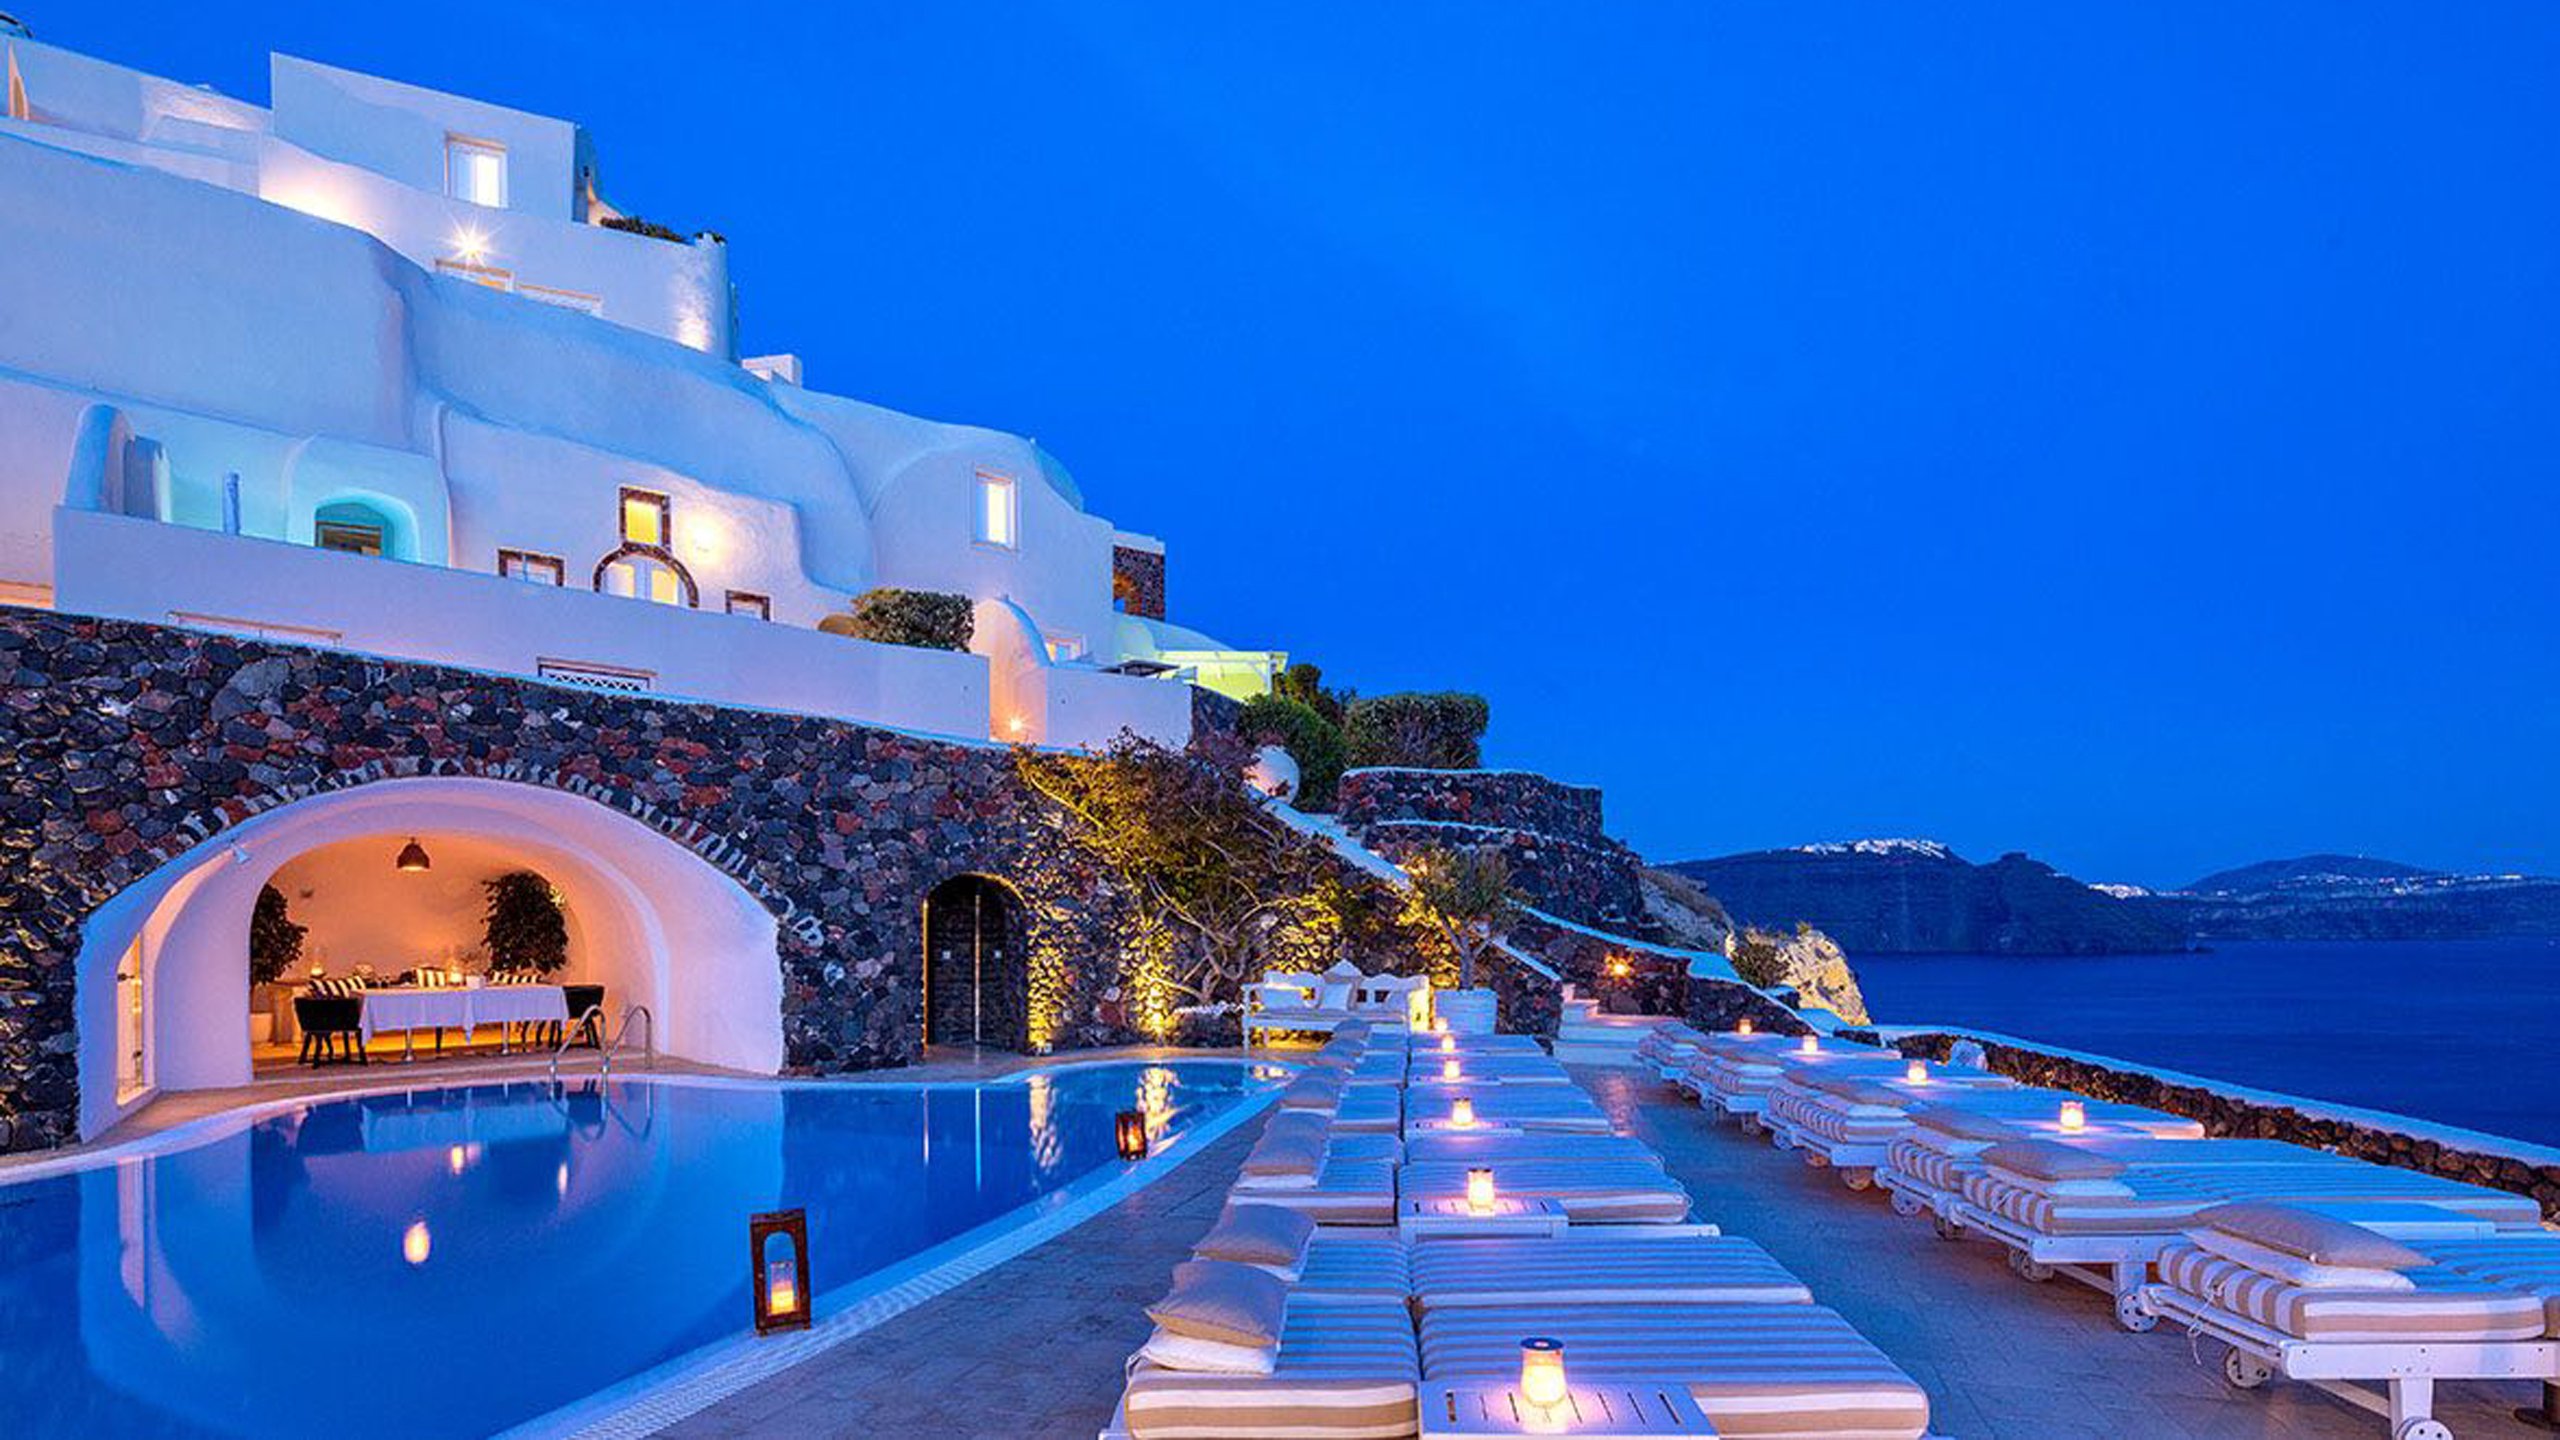 Hilton Hotels In Greece - wine2design